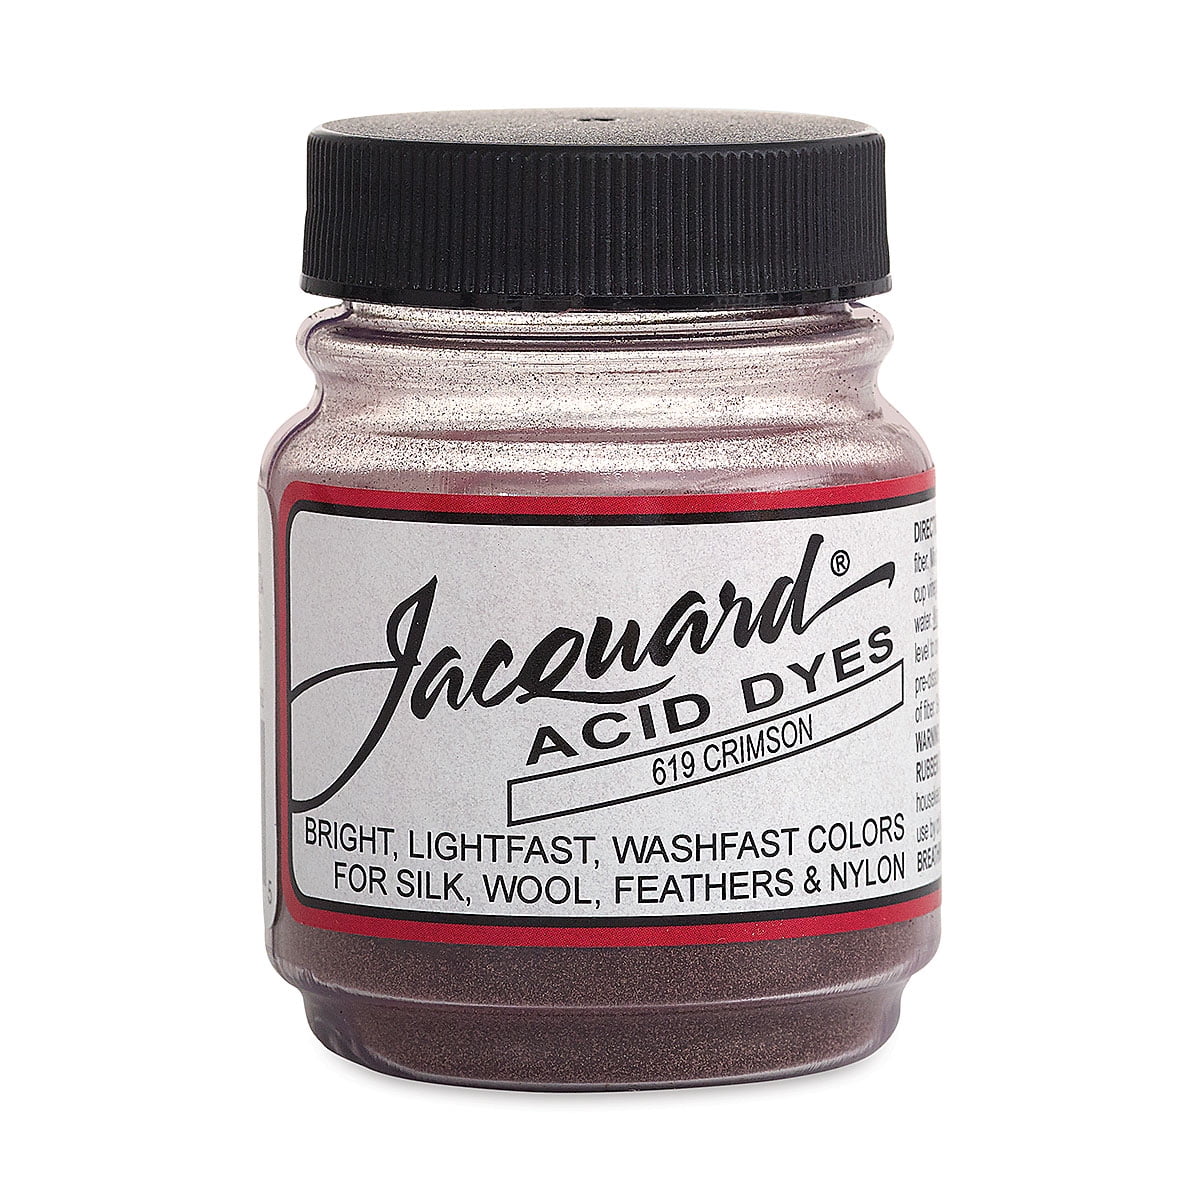 Jacquard Acid Dye - Color Set of 4 (.5 oz) + 1lb Citric Acid